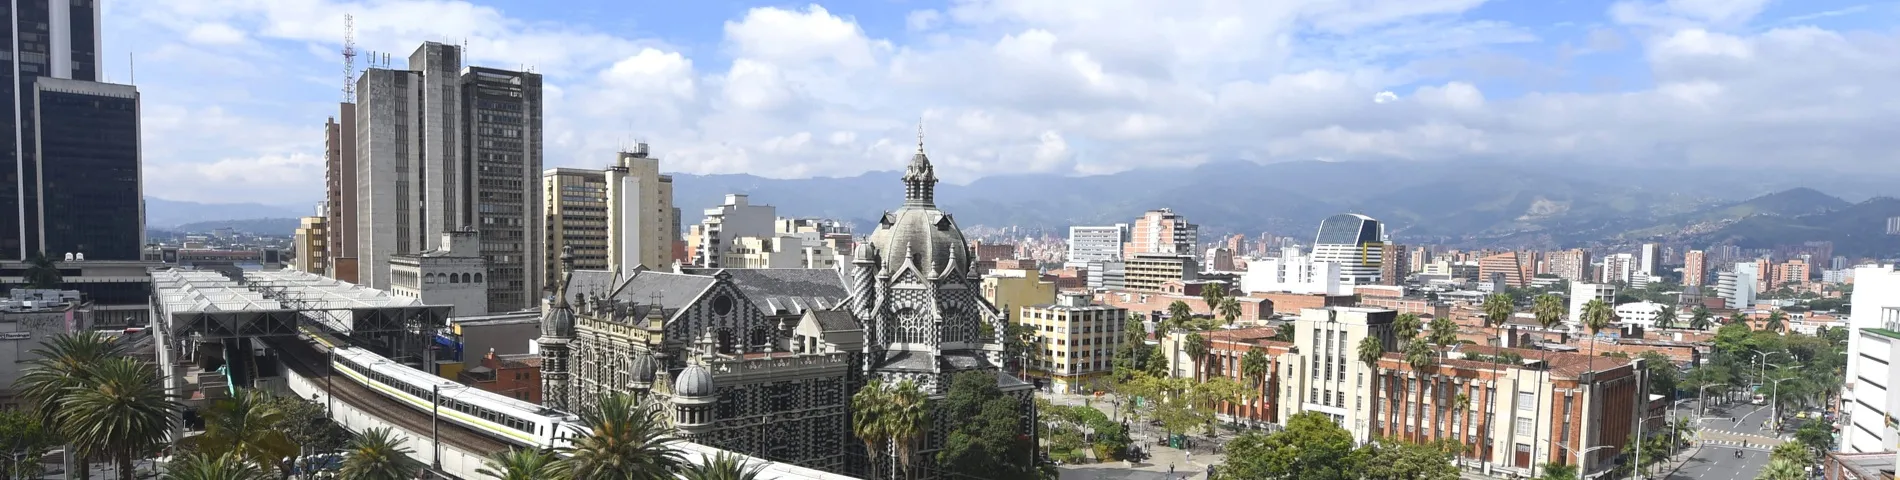 Medellín - Standardowy